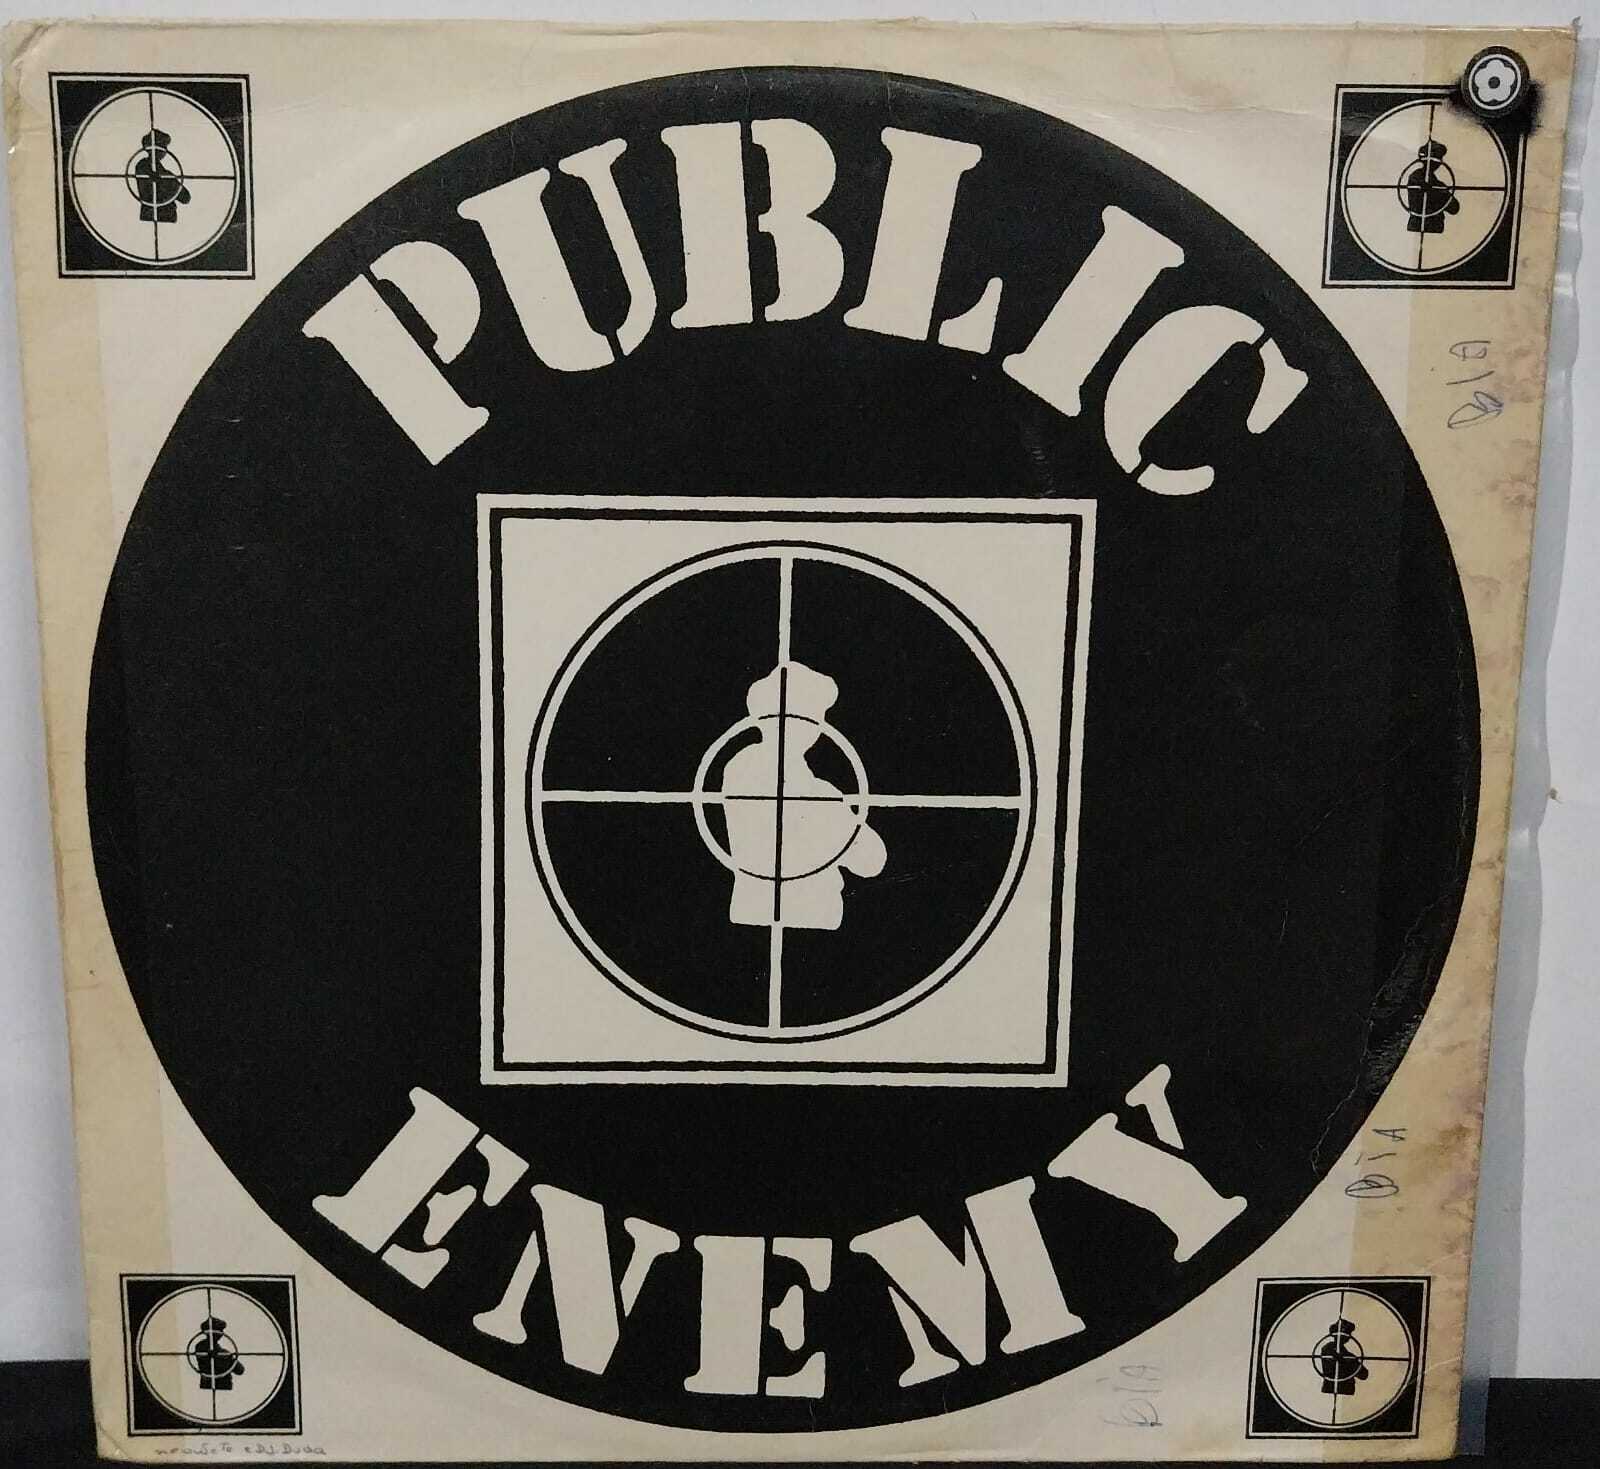 Vinil - Public Enemy - 1991 for DJ (USA)